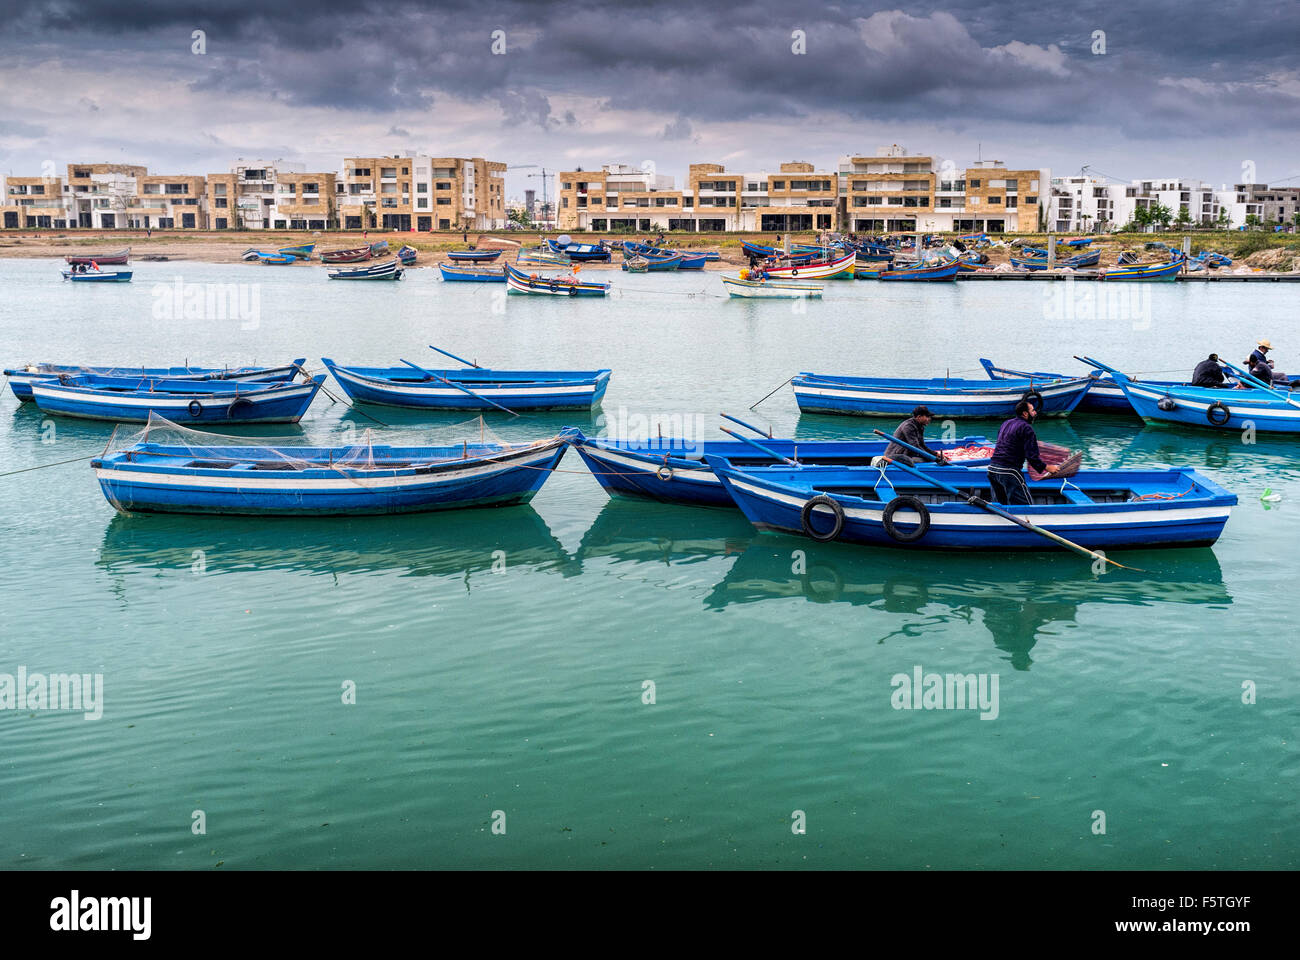 Bateaux de pêche de la rivière Bou Regreg, Rabat, Maroc Banque D'Images